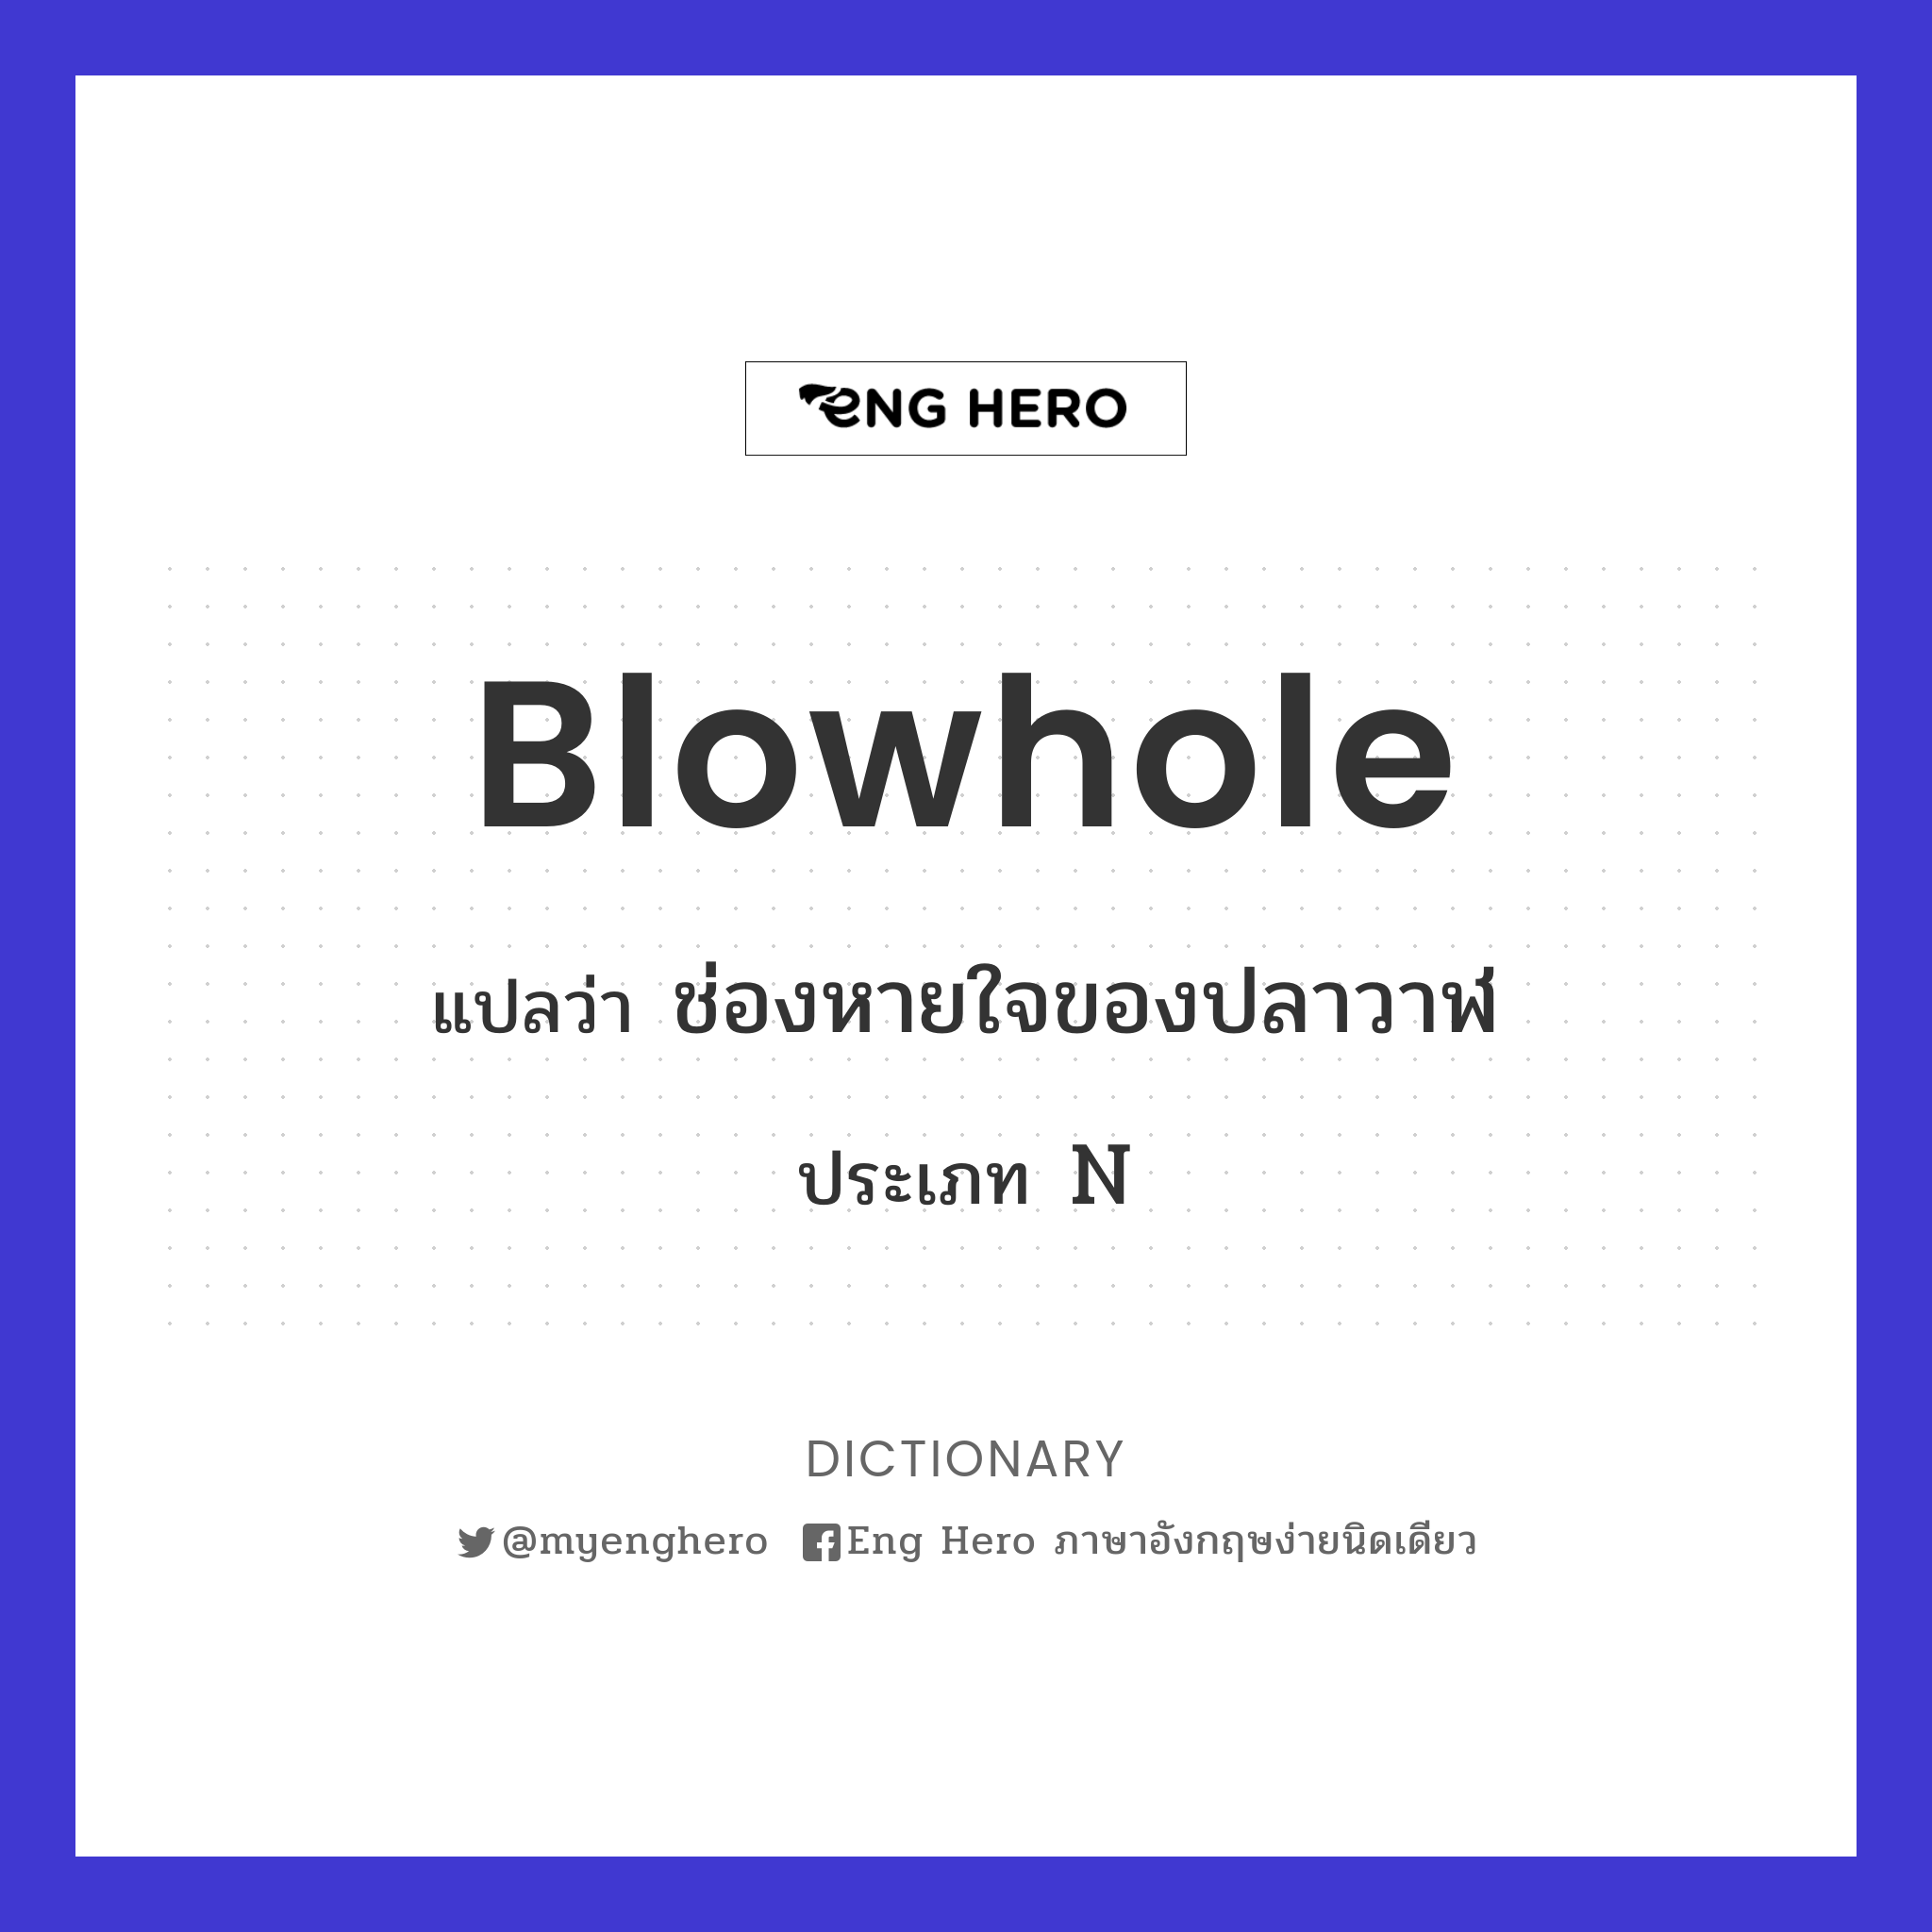 blowhole